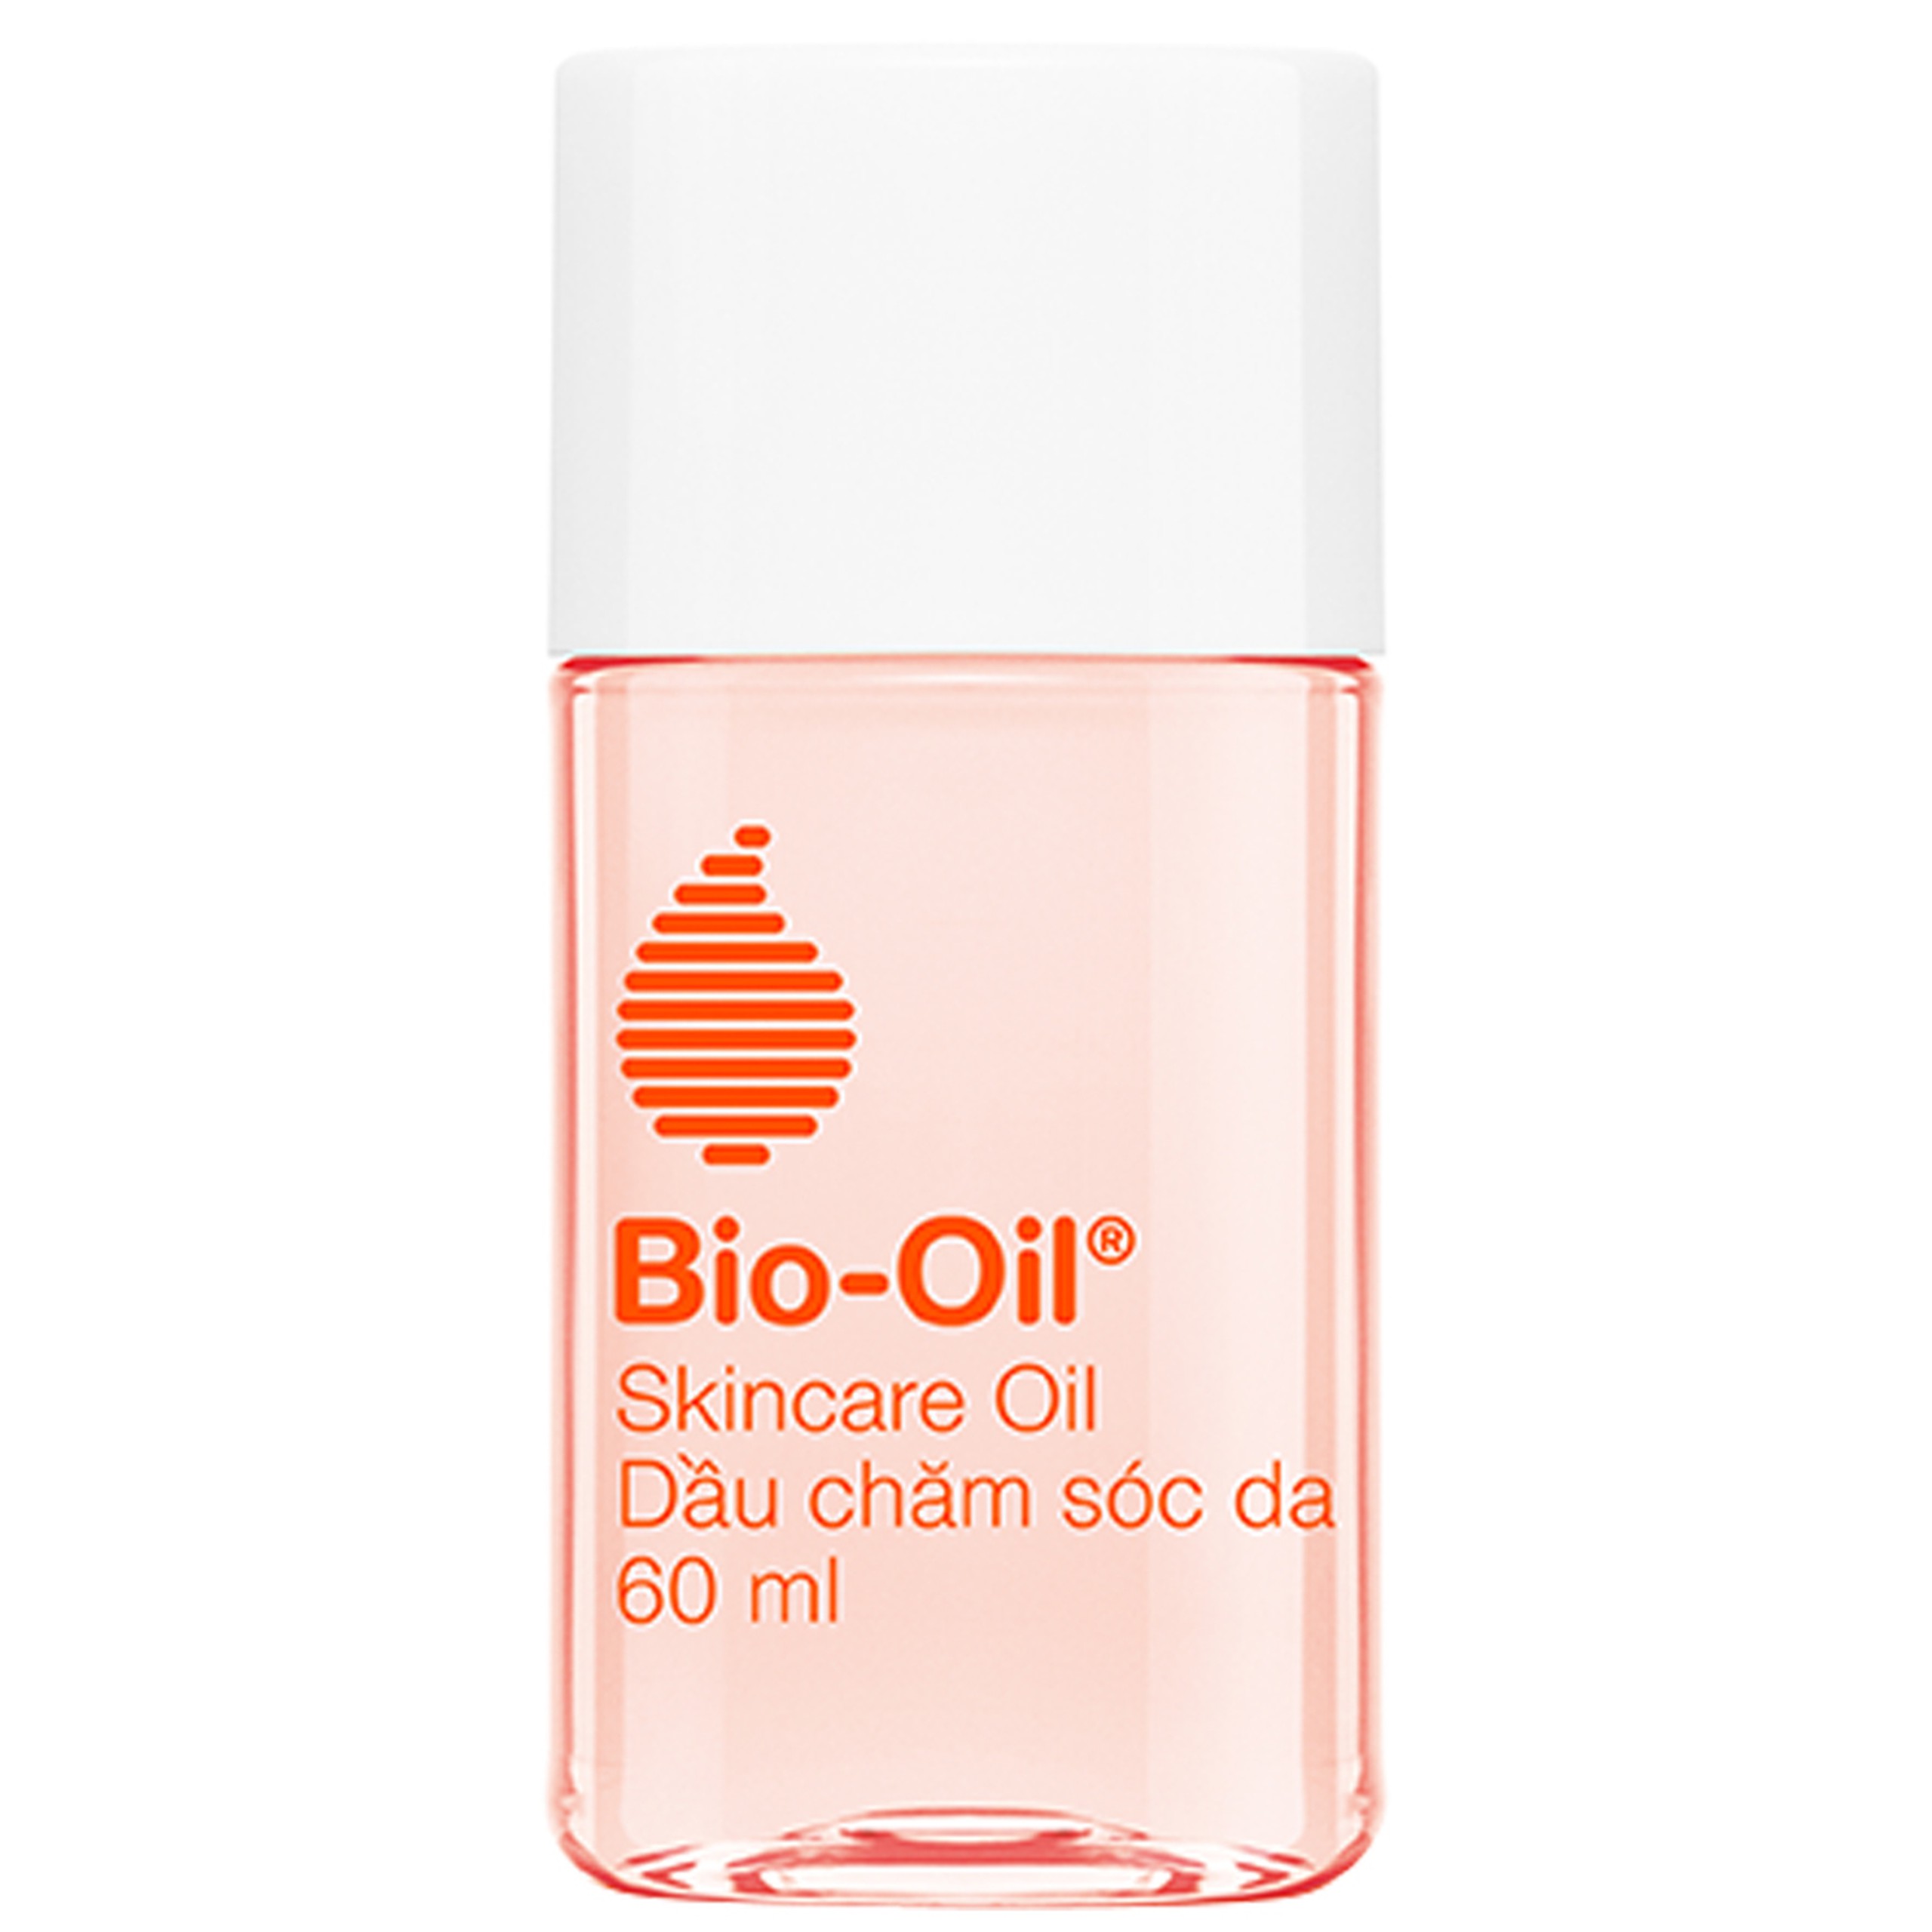 Dầu dưỡng da Bio-Oil Specialist Skincare Oil chăm sóc da bị sẹo, vết rạn, da không đều màu (60ml)